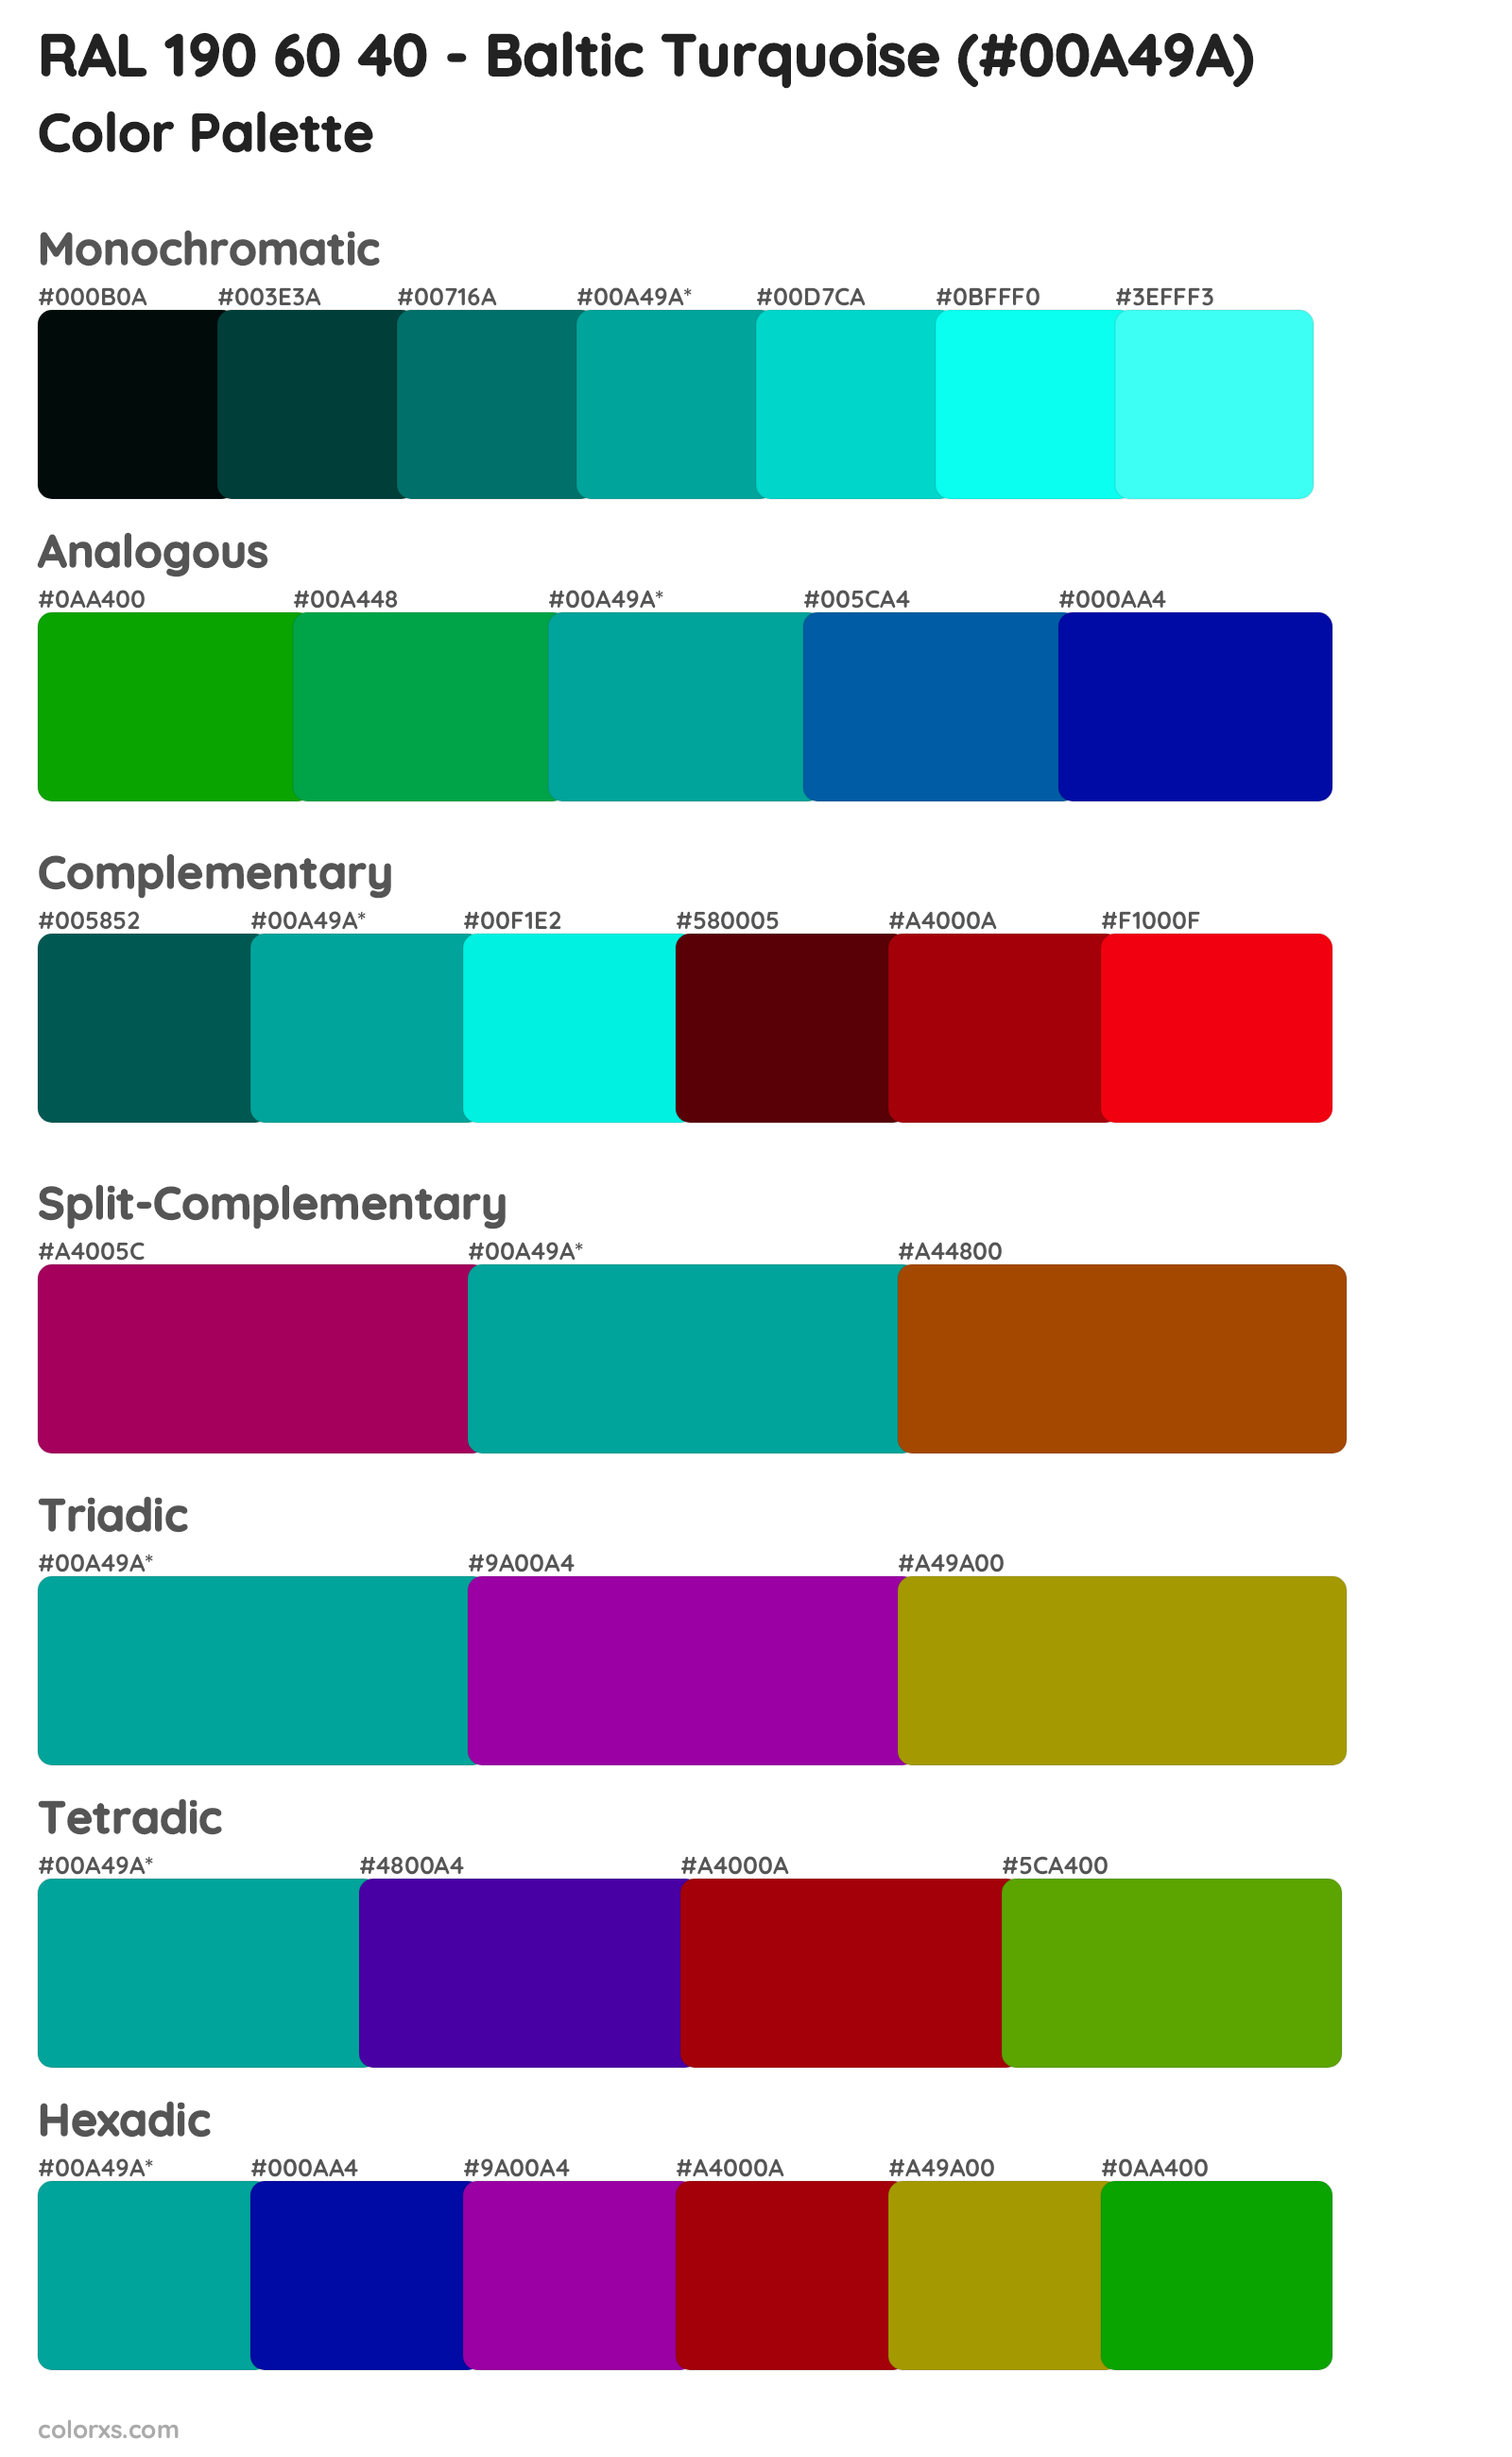 RAL 190 60 40 - Baltic Turquoise Color Scheme Palettes